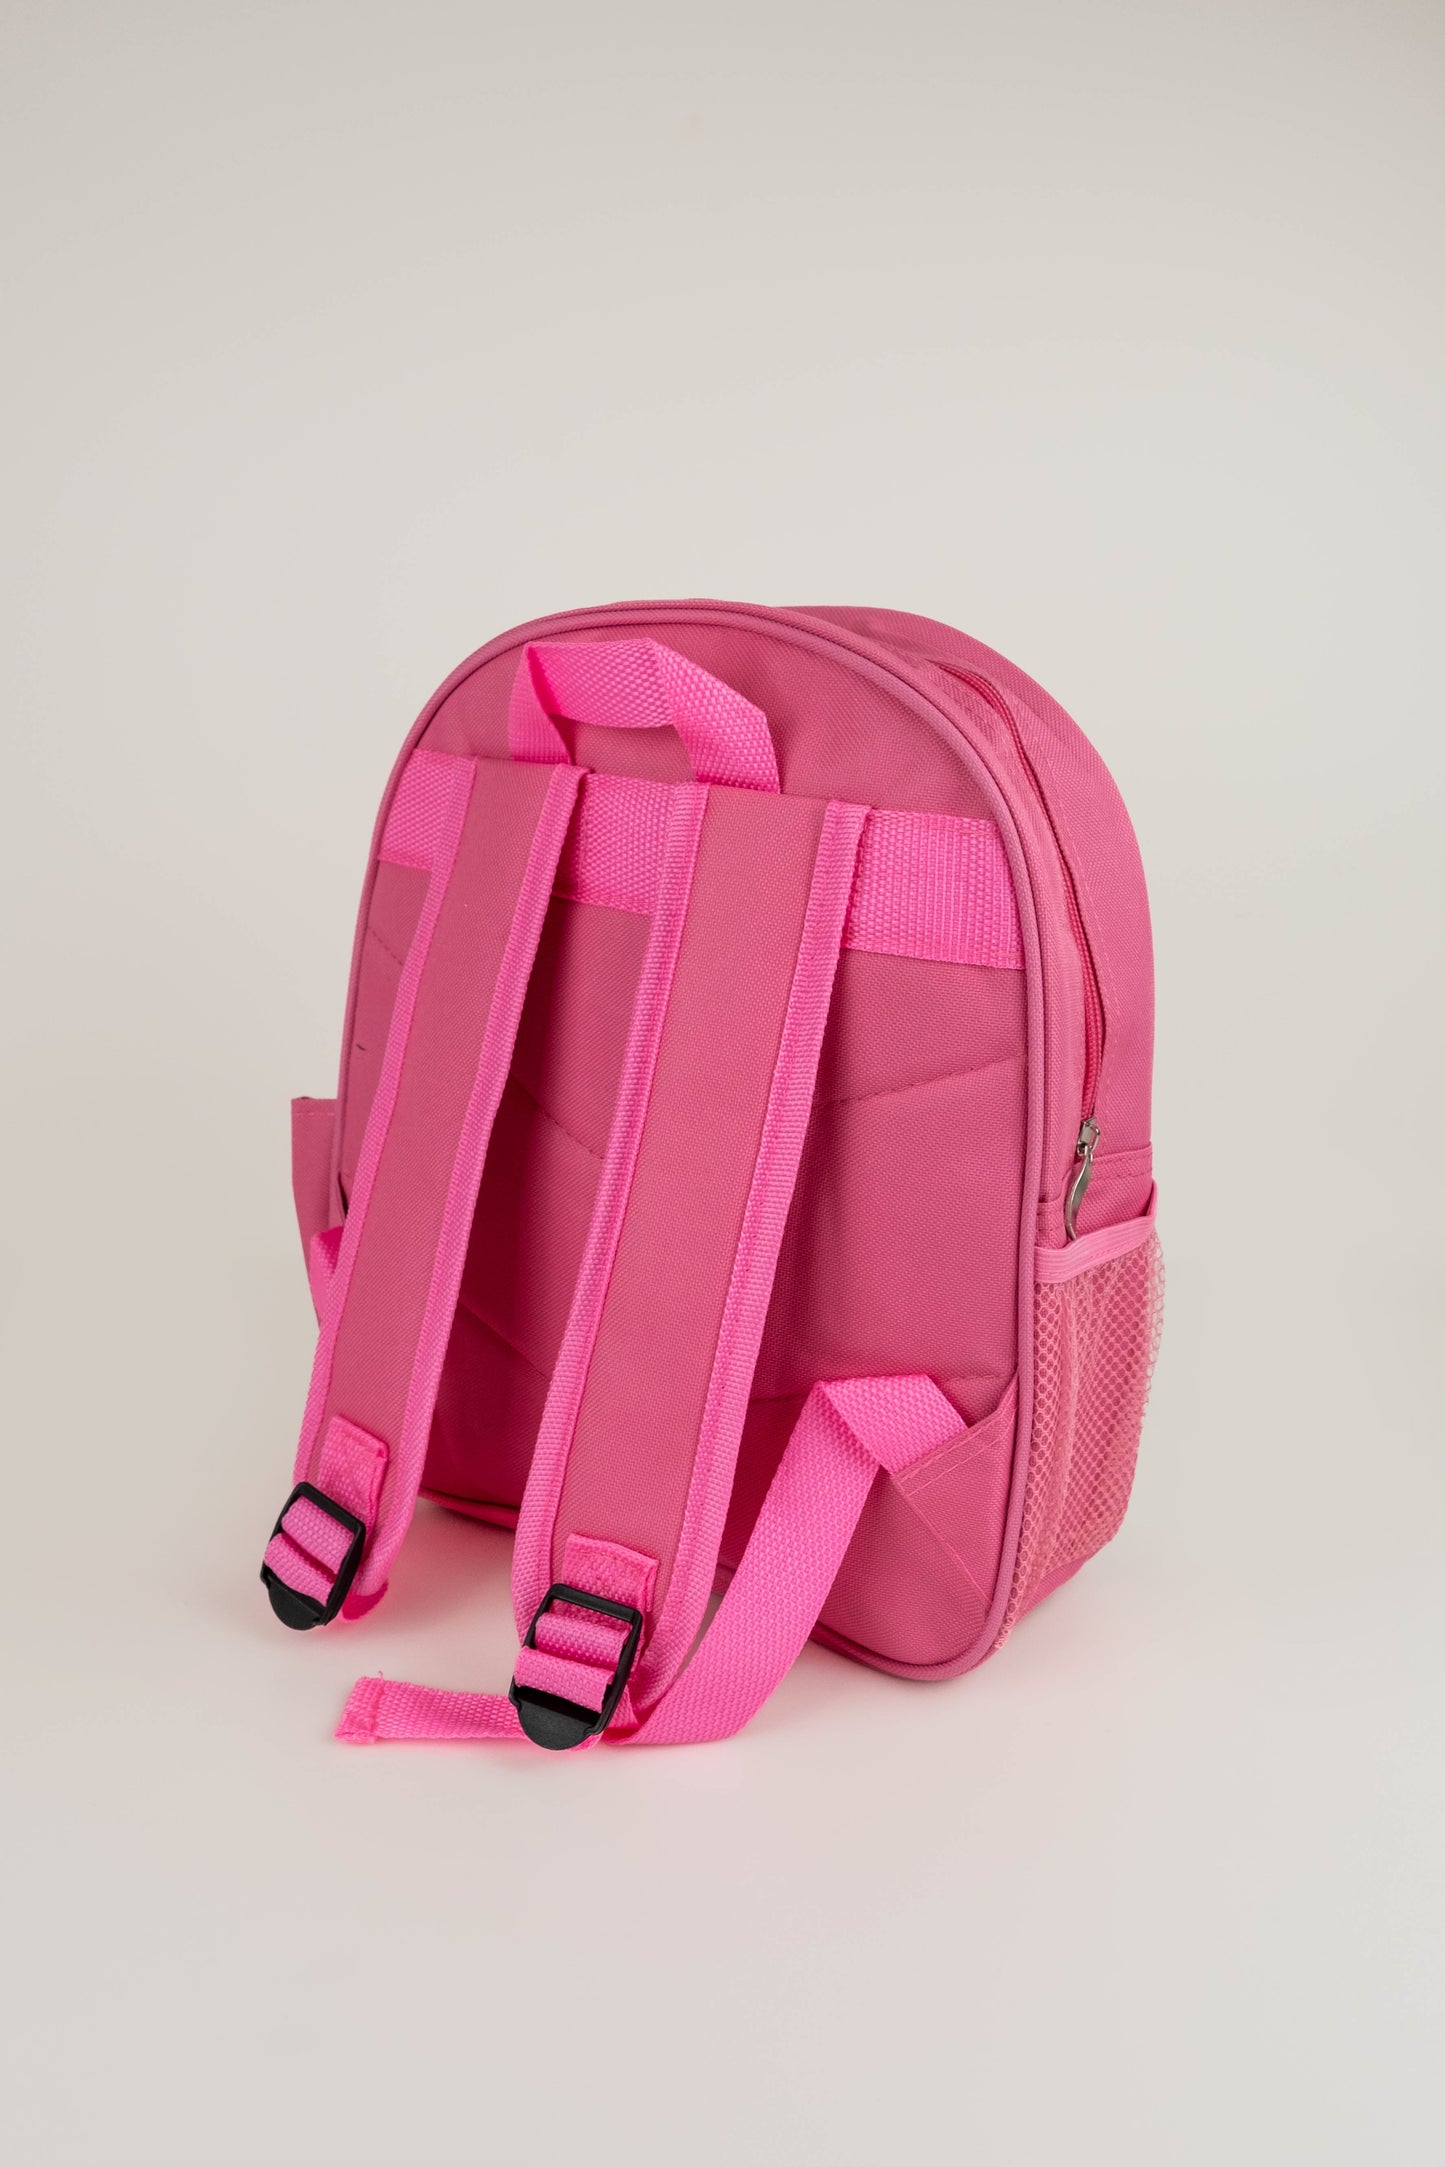 Children’s Personalised Backpack - Boho Dinosaur Design - Pink